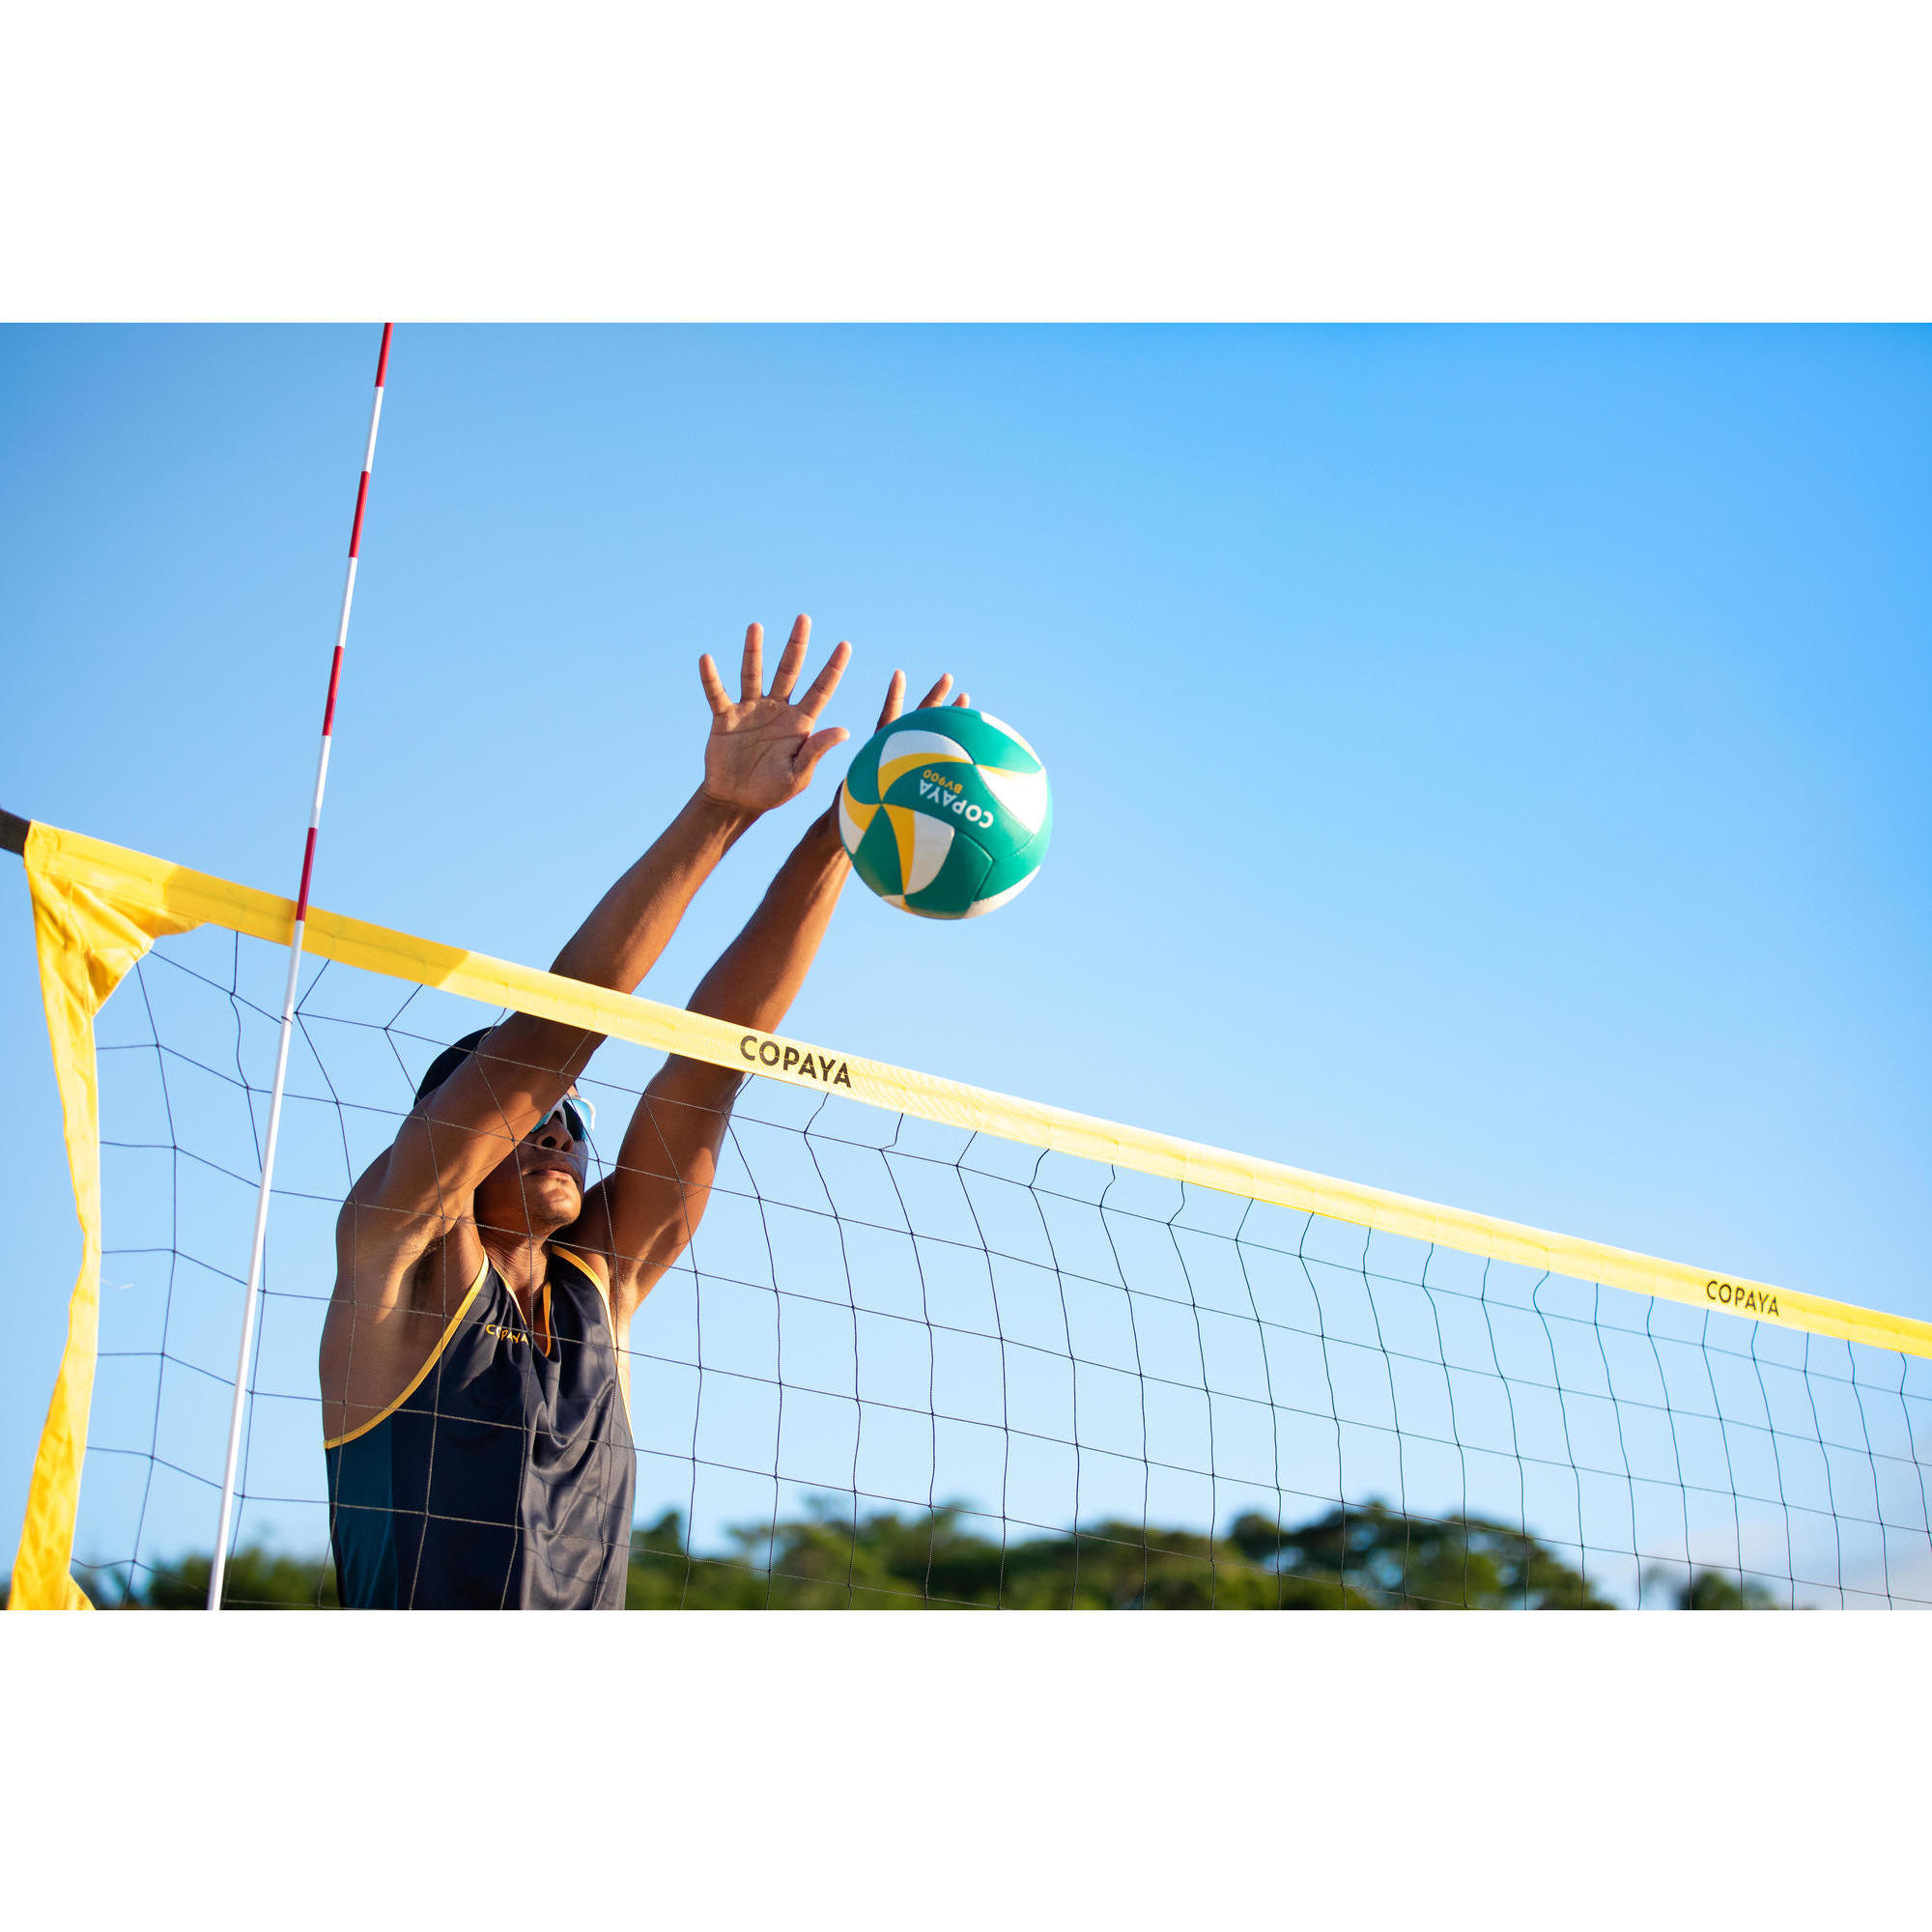 volleyball net price in decathlon